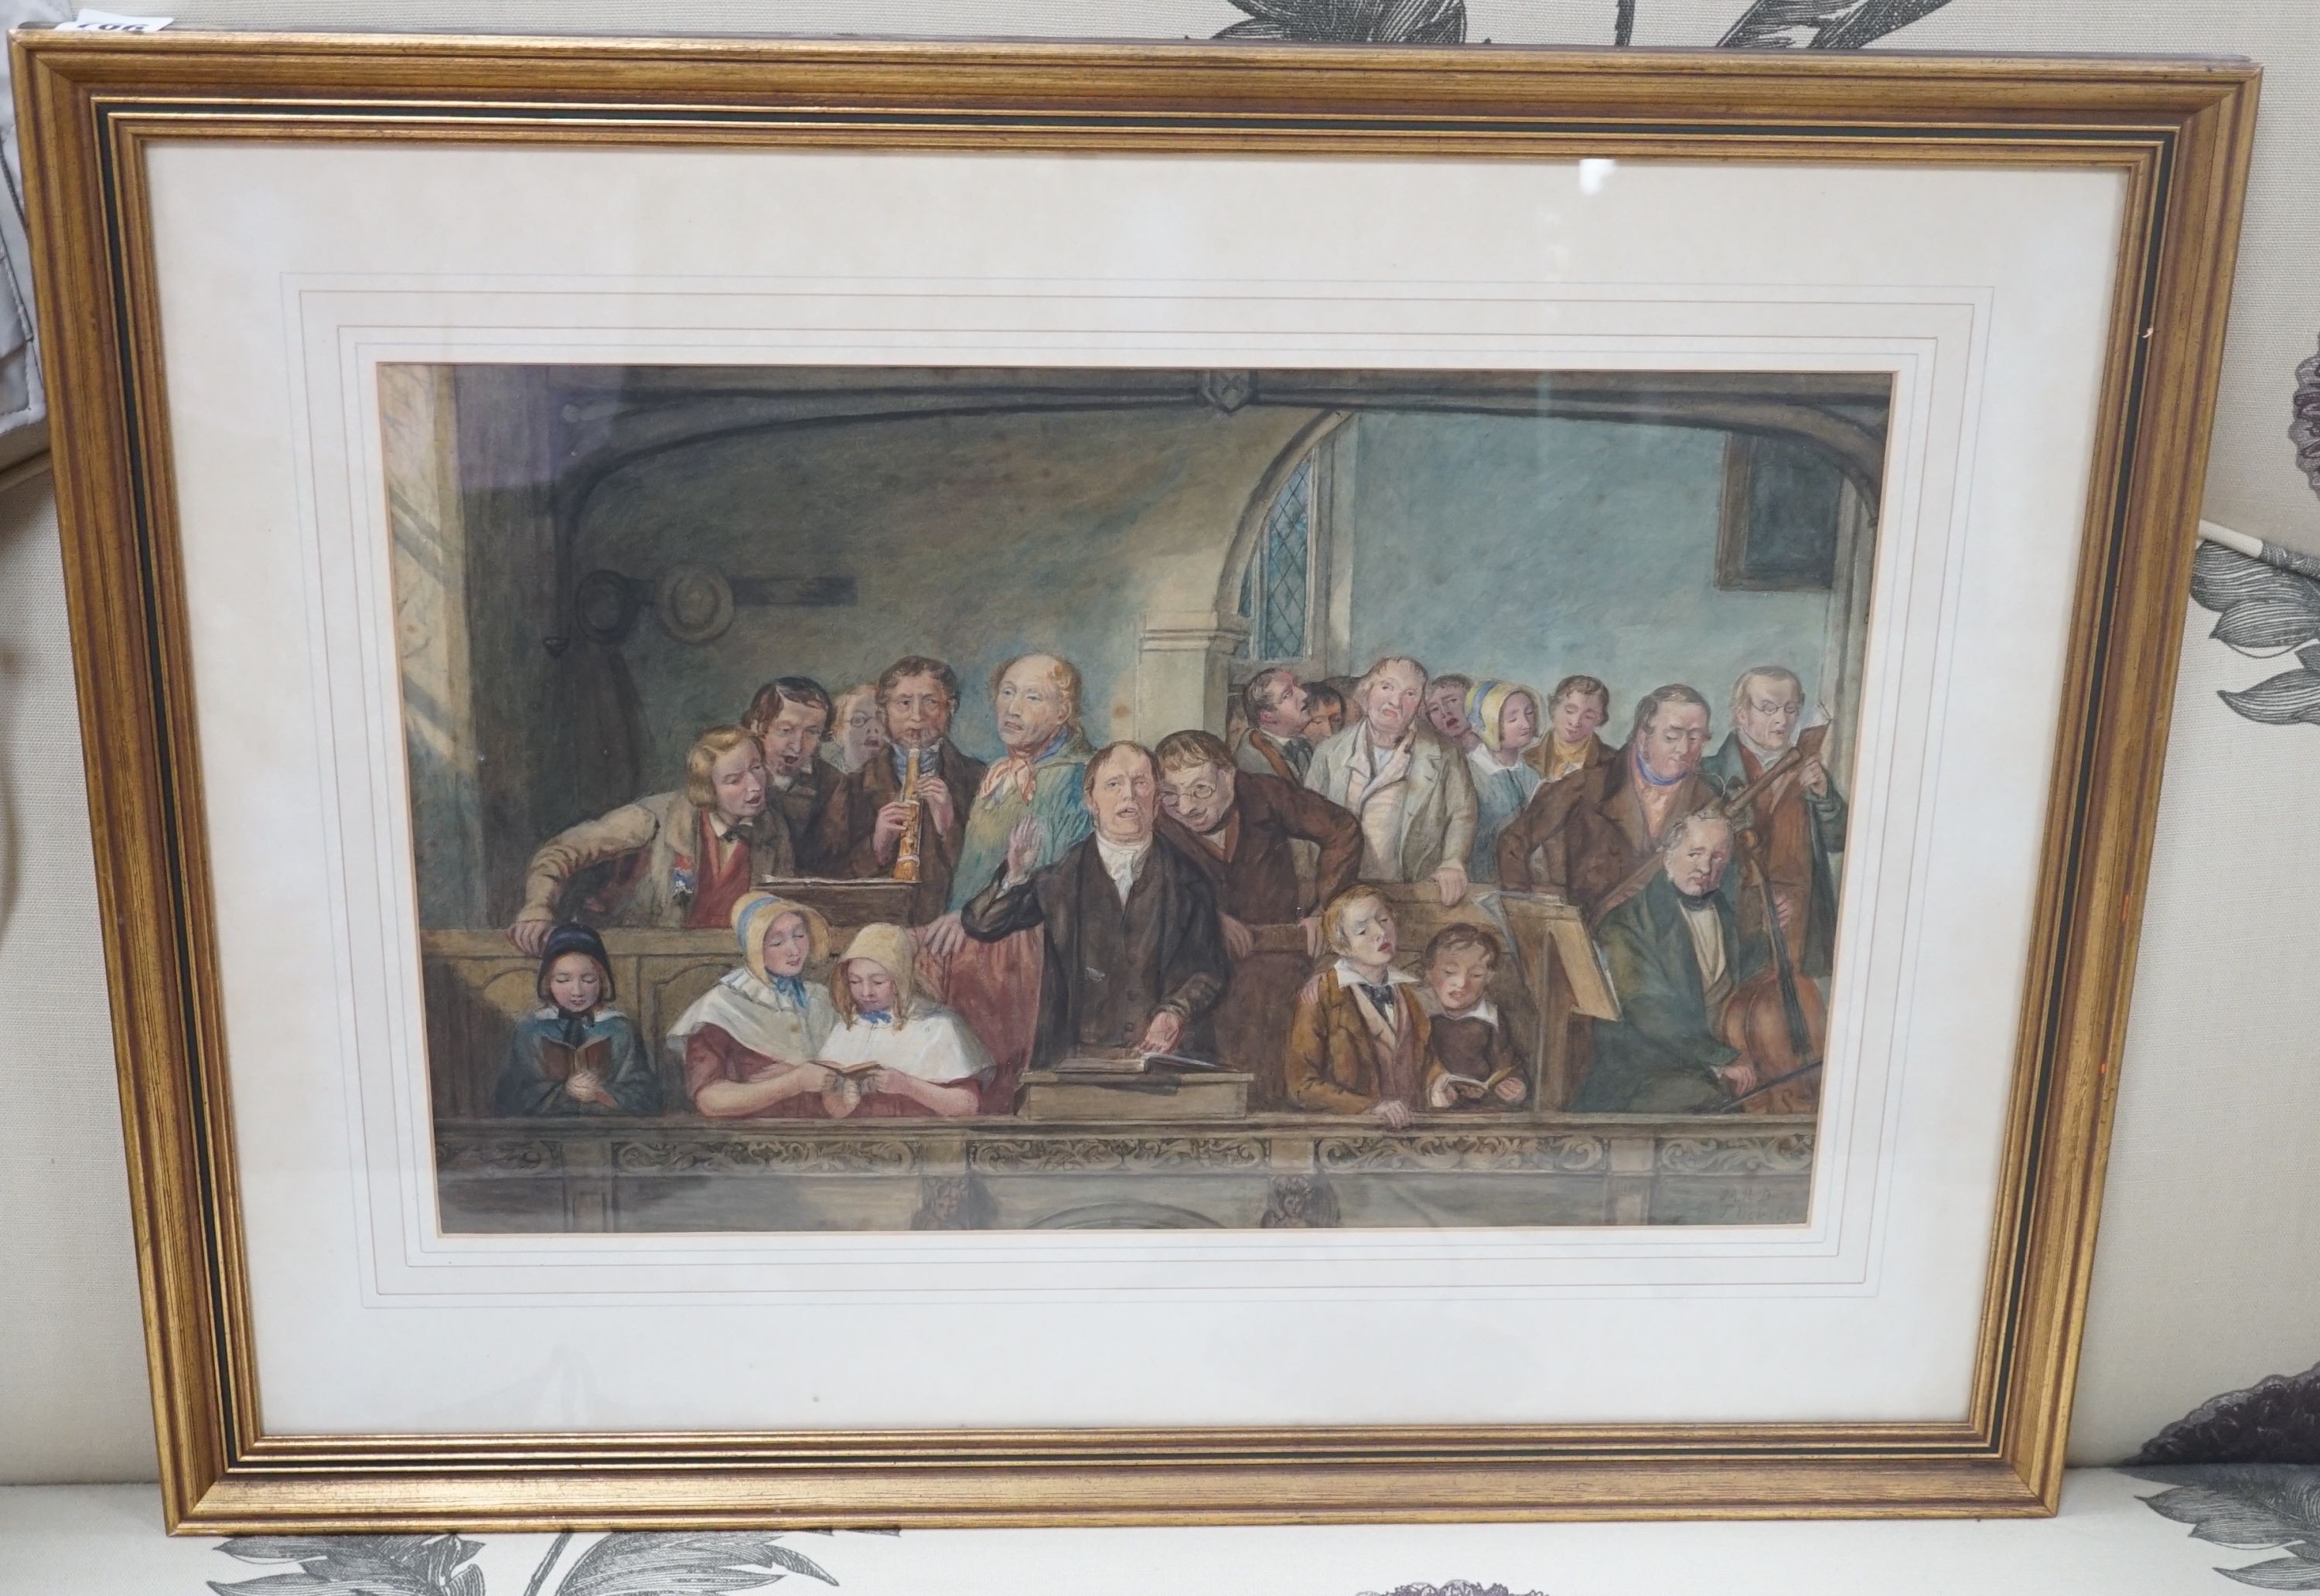 MRD, late 19th century after Thomas Webster, Watercolour, village choir, 31.5 cm x 49 cm